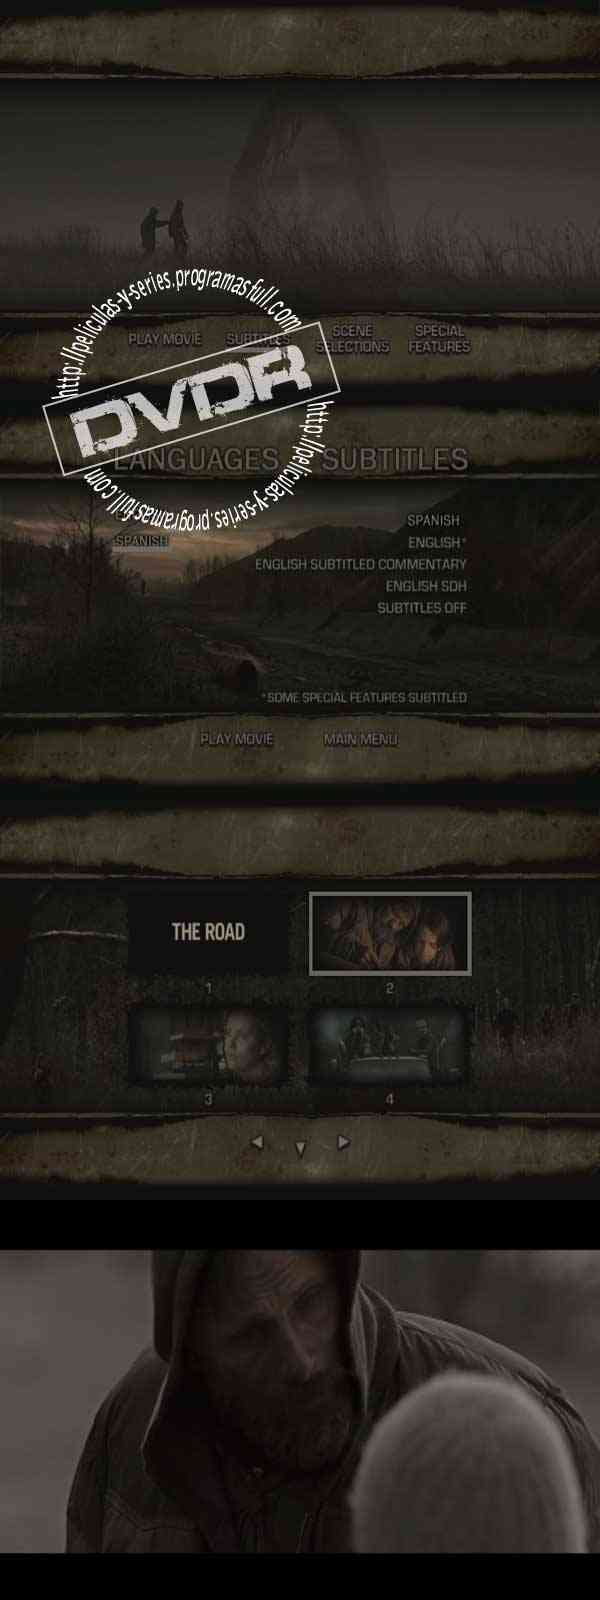 The Road (2009) Dvd Full Ntsc